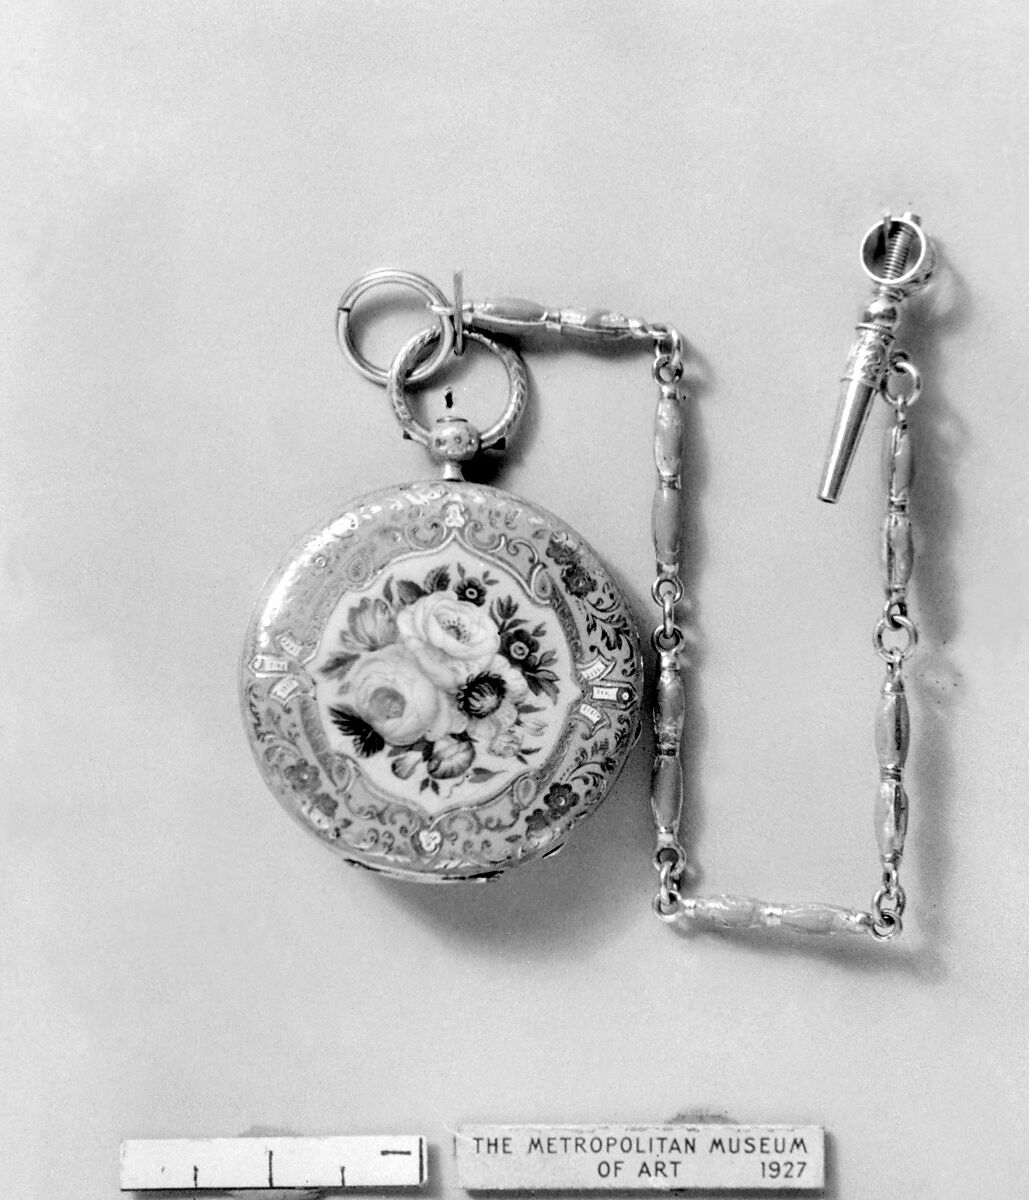 Watch and key, Watchmaker: S. Reymond (active ca. 1840), Gold, enamel, steel, jewels, Swiss, Geneva 